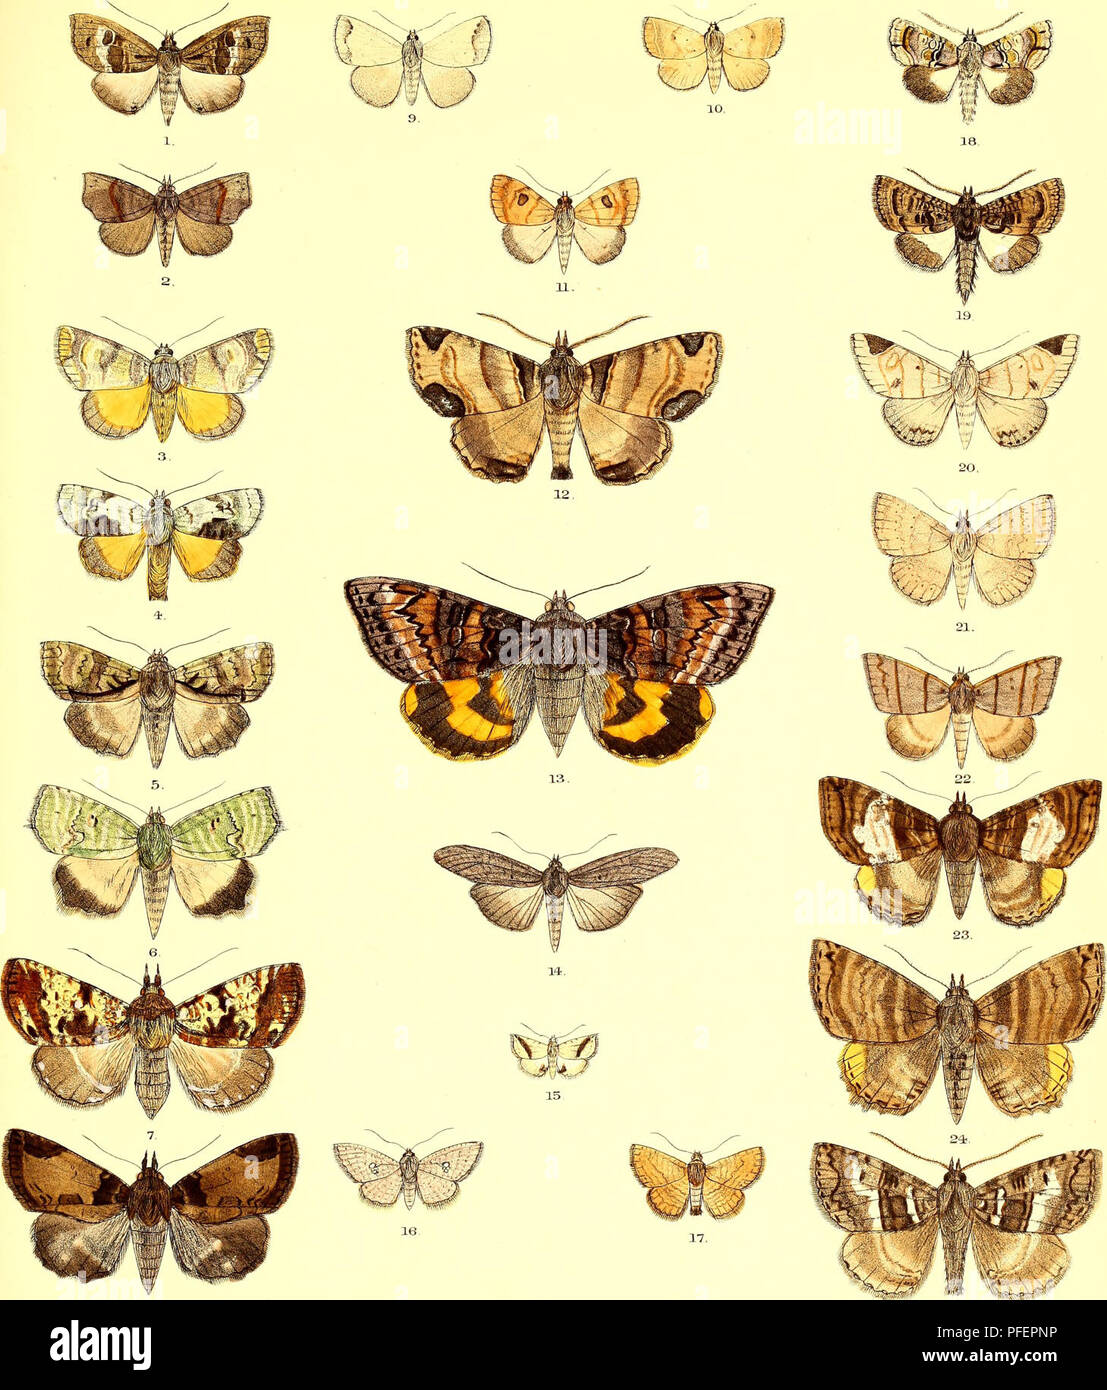 . Descriptions of new Indian lepidopterous insects from the collection of the late Mr. W.S. Atkinson. Lepidoptera -- India; Lepidoptera. Asiatic Soaety^ Bengal Lepidoptera Plat. 8. 25 r.CMDore ad et litt MmtemBro l,Coeurica fasciata 2, Thalatta fasciosa 3. Tambana catocalma. 4, Bleruna pannosa 5, Blenina qumaria 6,AmrelIa angialipennis. 7, Donda thoracica, 8, Epcheia costipannosa. 9,Poap]niia pallens. 10,Poaphila uruforrrus. 11, Poaphila oculata. 12, Sypna pannosa. 13,Catocala tapestrina. 14, Sadajrsa longipenras. 15,Mestleta acontioides, 16, D-ordara lobata. 17, Sonagara strigosa. 18,Anophia  Stock Photo